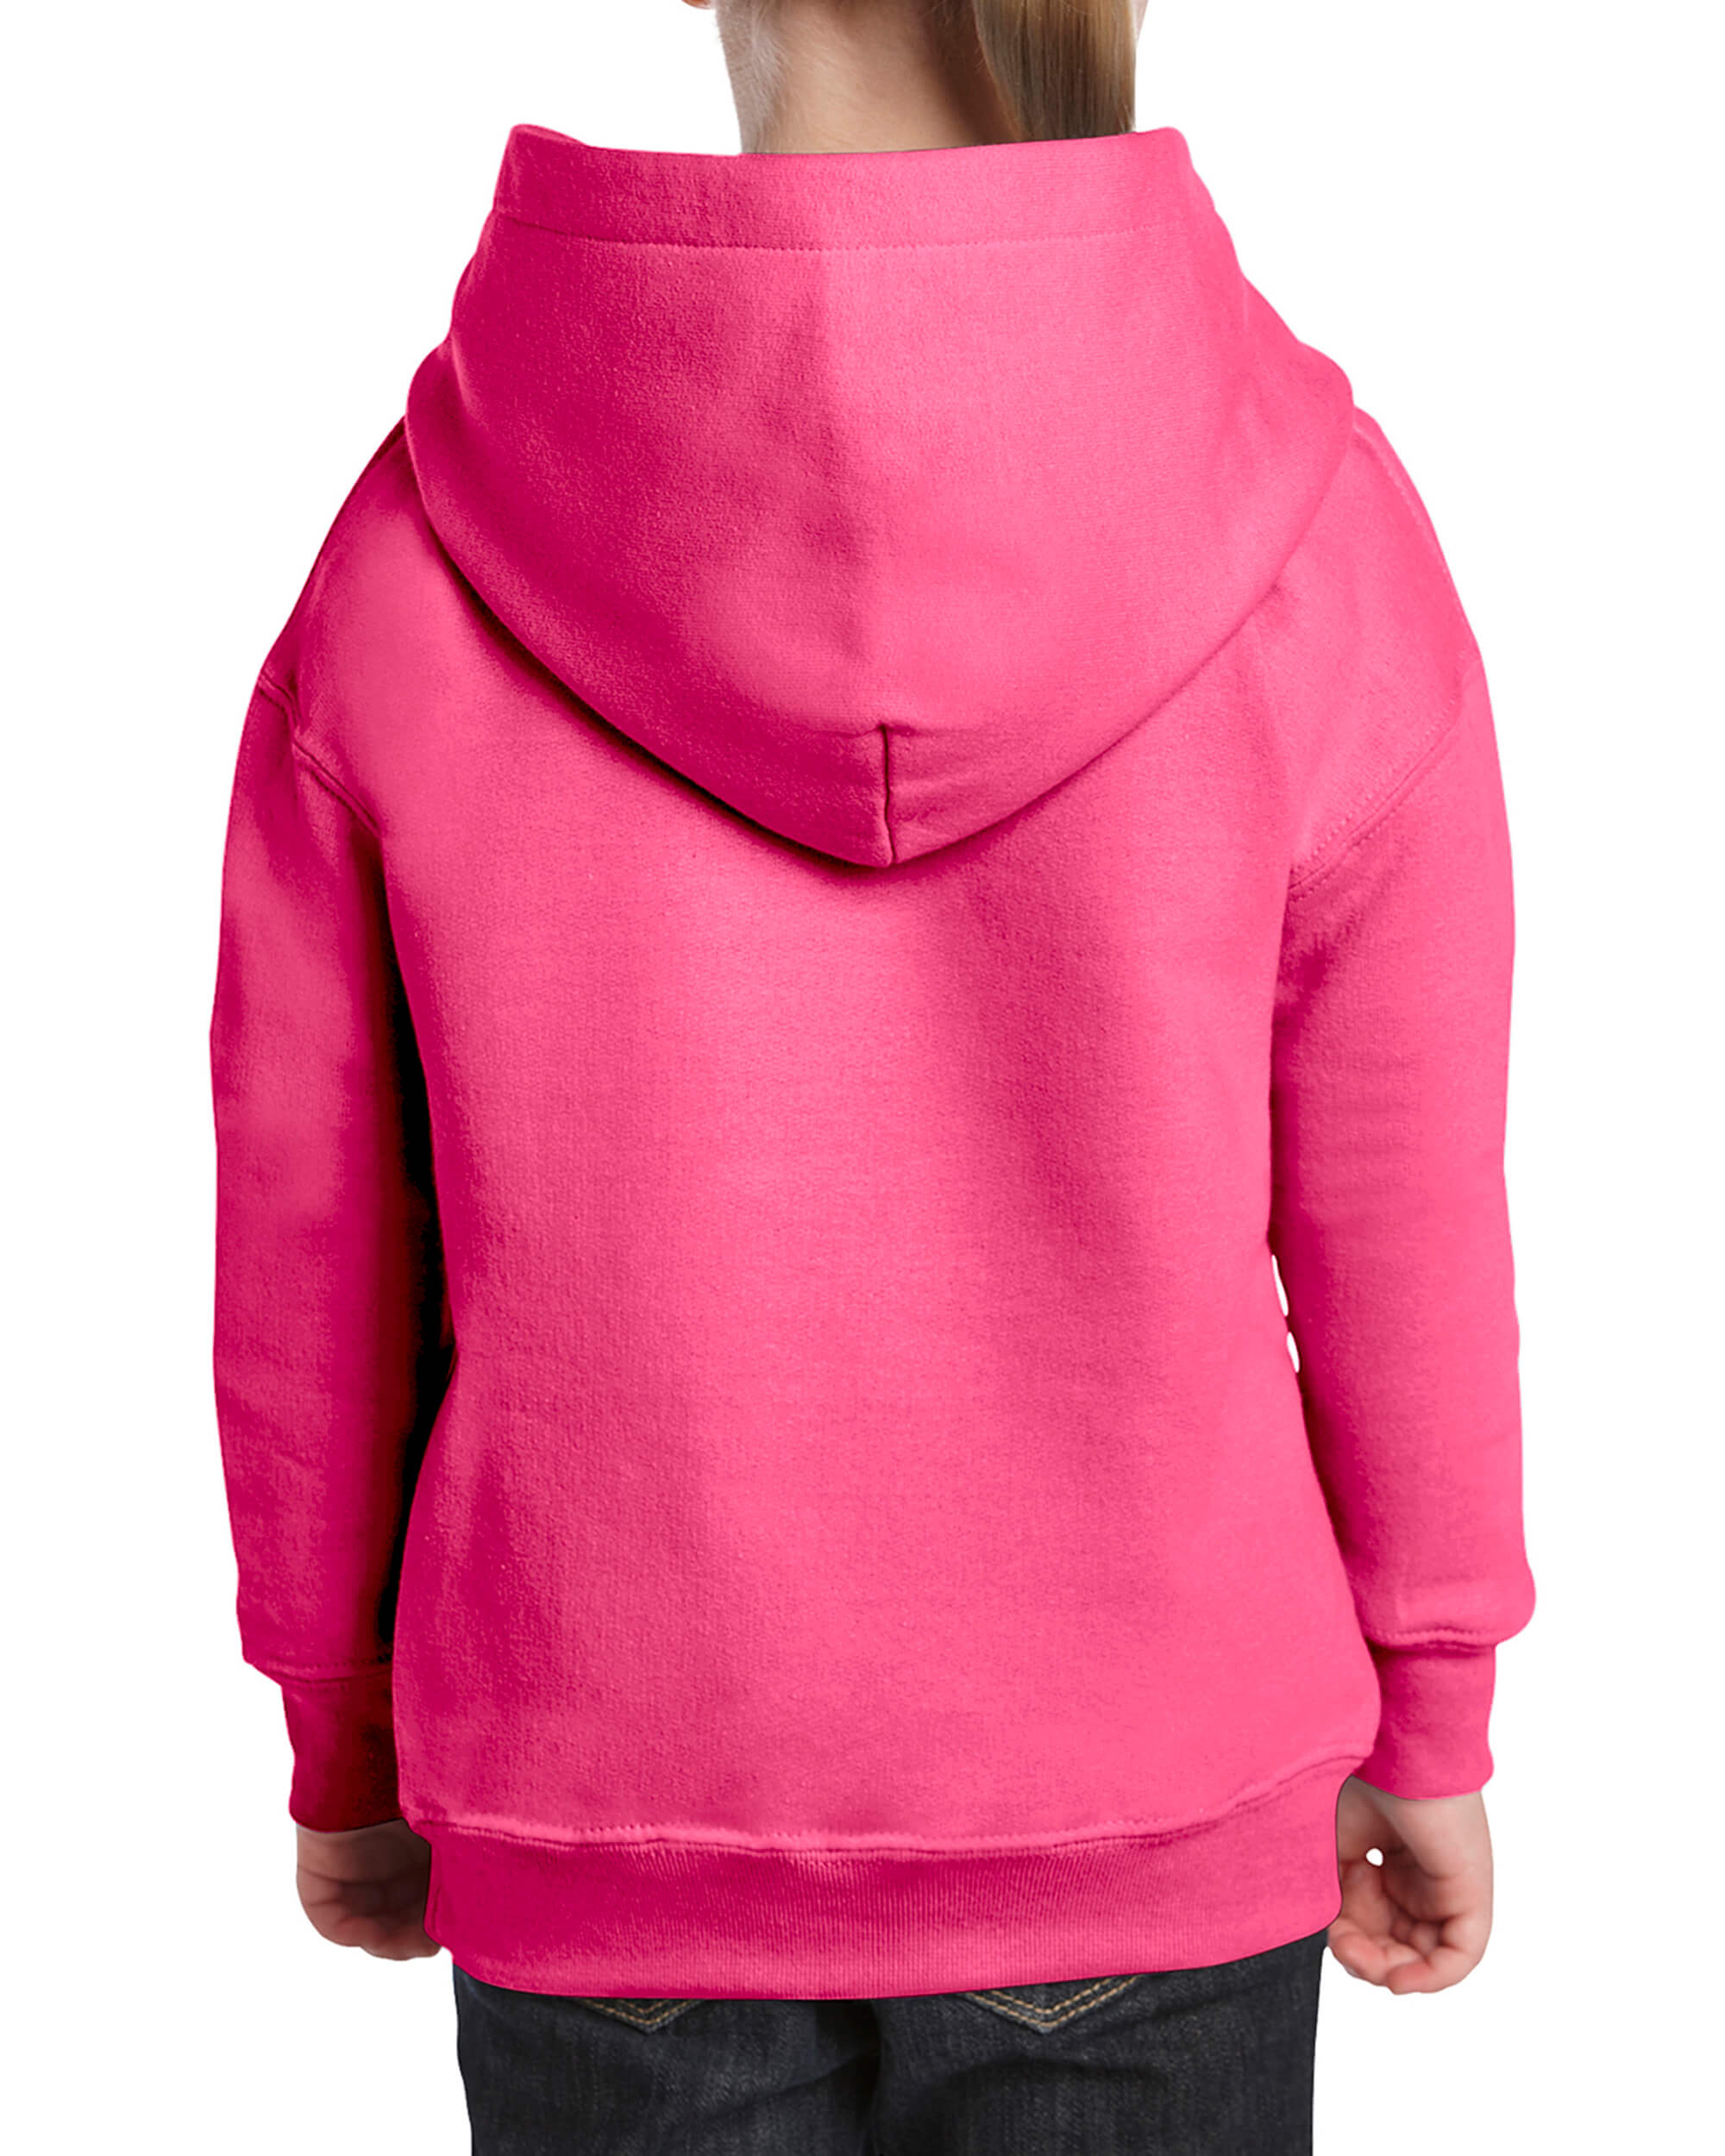 Kids Hoodie - Safety Pink